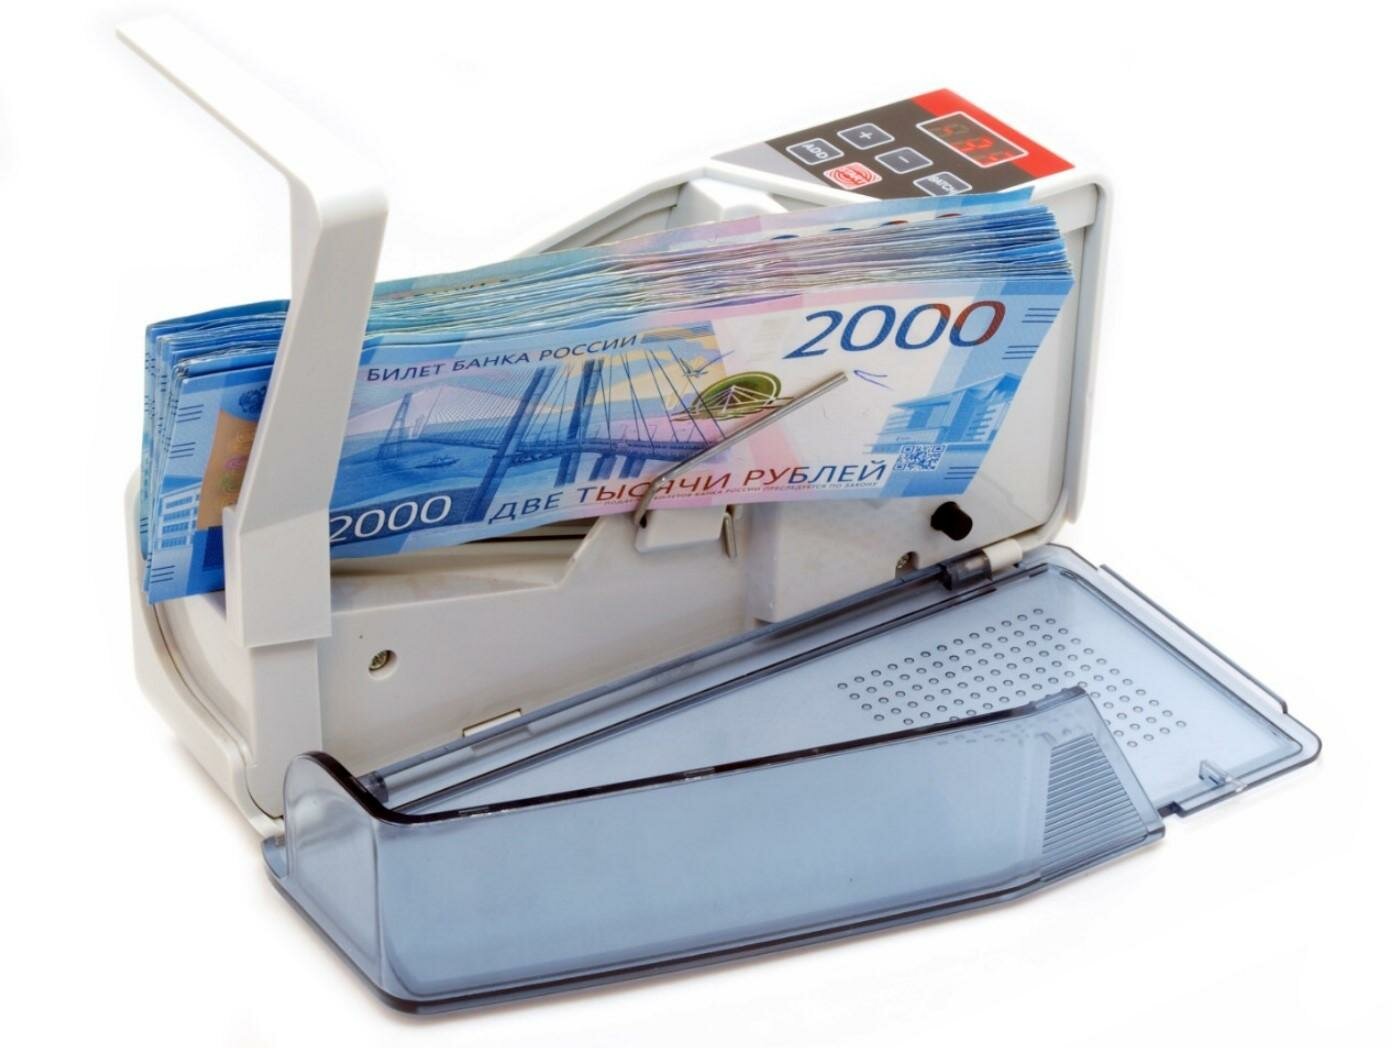 Портативные счетчики банкнот - FJ-V40 DOLS-PRO (V82437FJV) мини счётная машинка для купюр